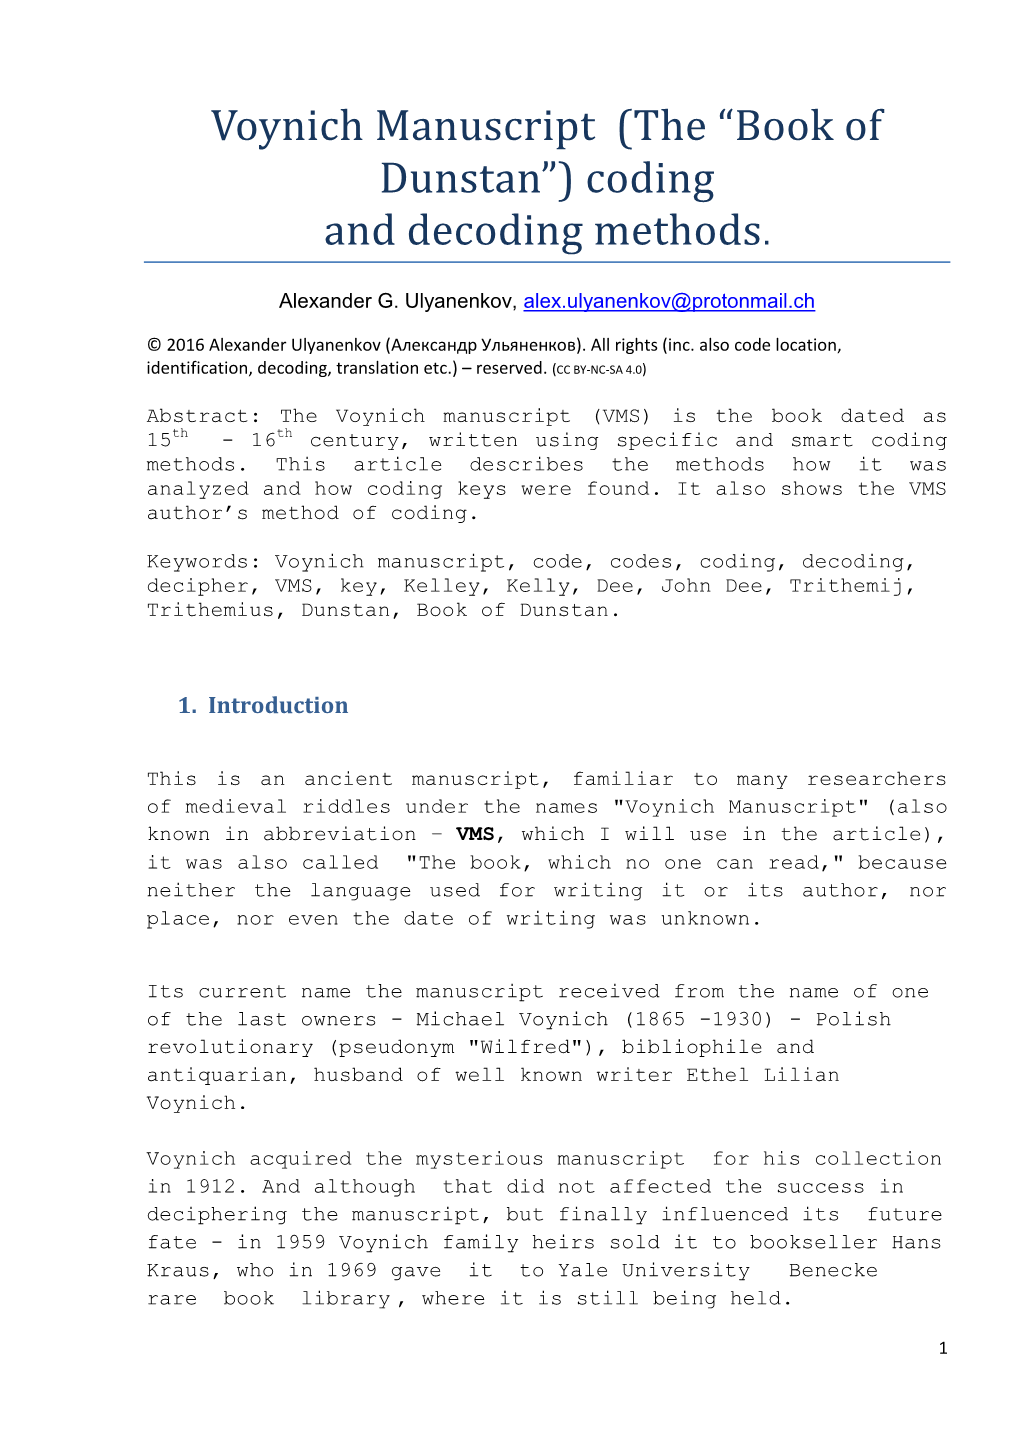 Voynich Manuscript (The “Book of Dunstan”) Coding and Decoding Methods